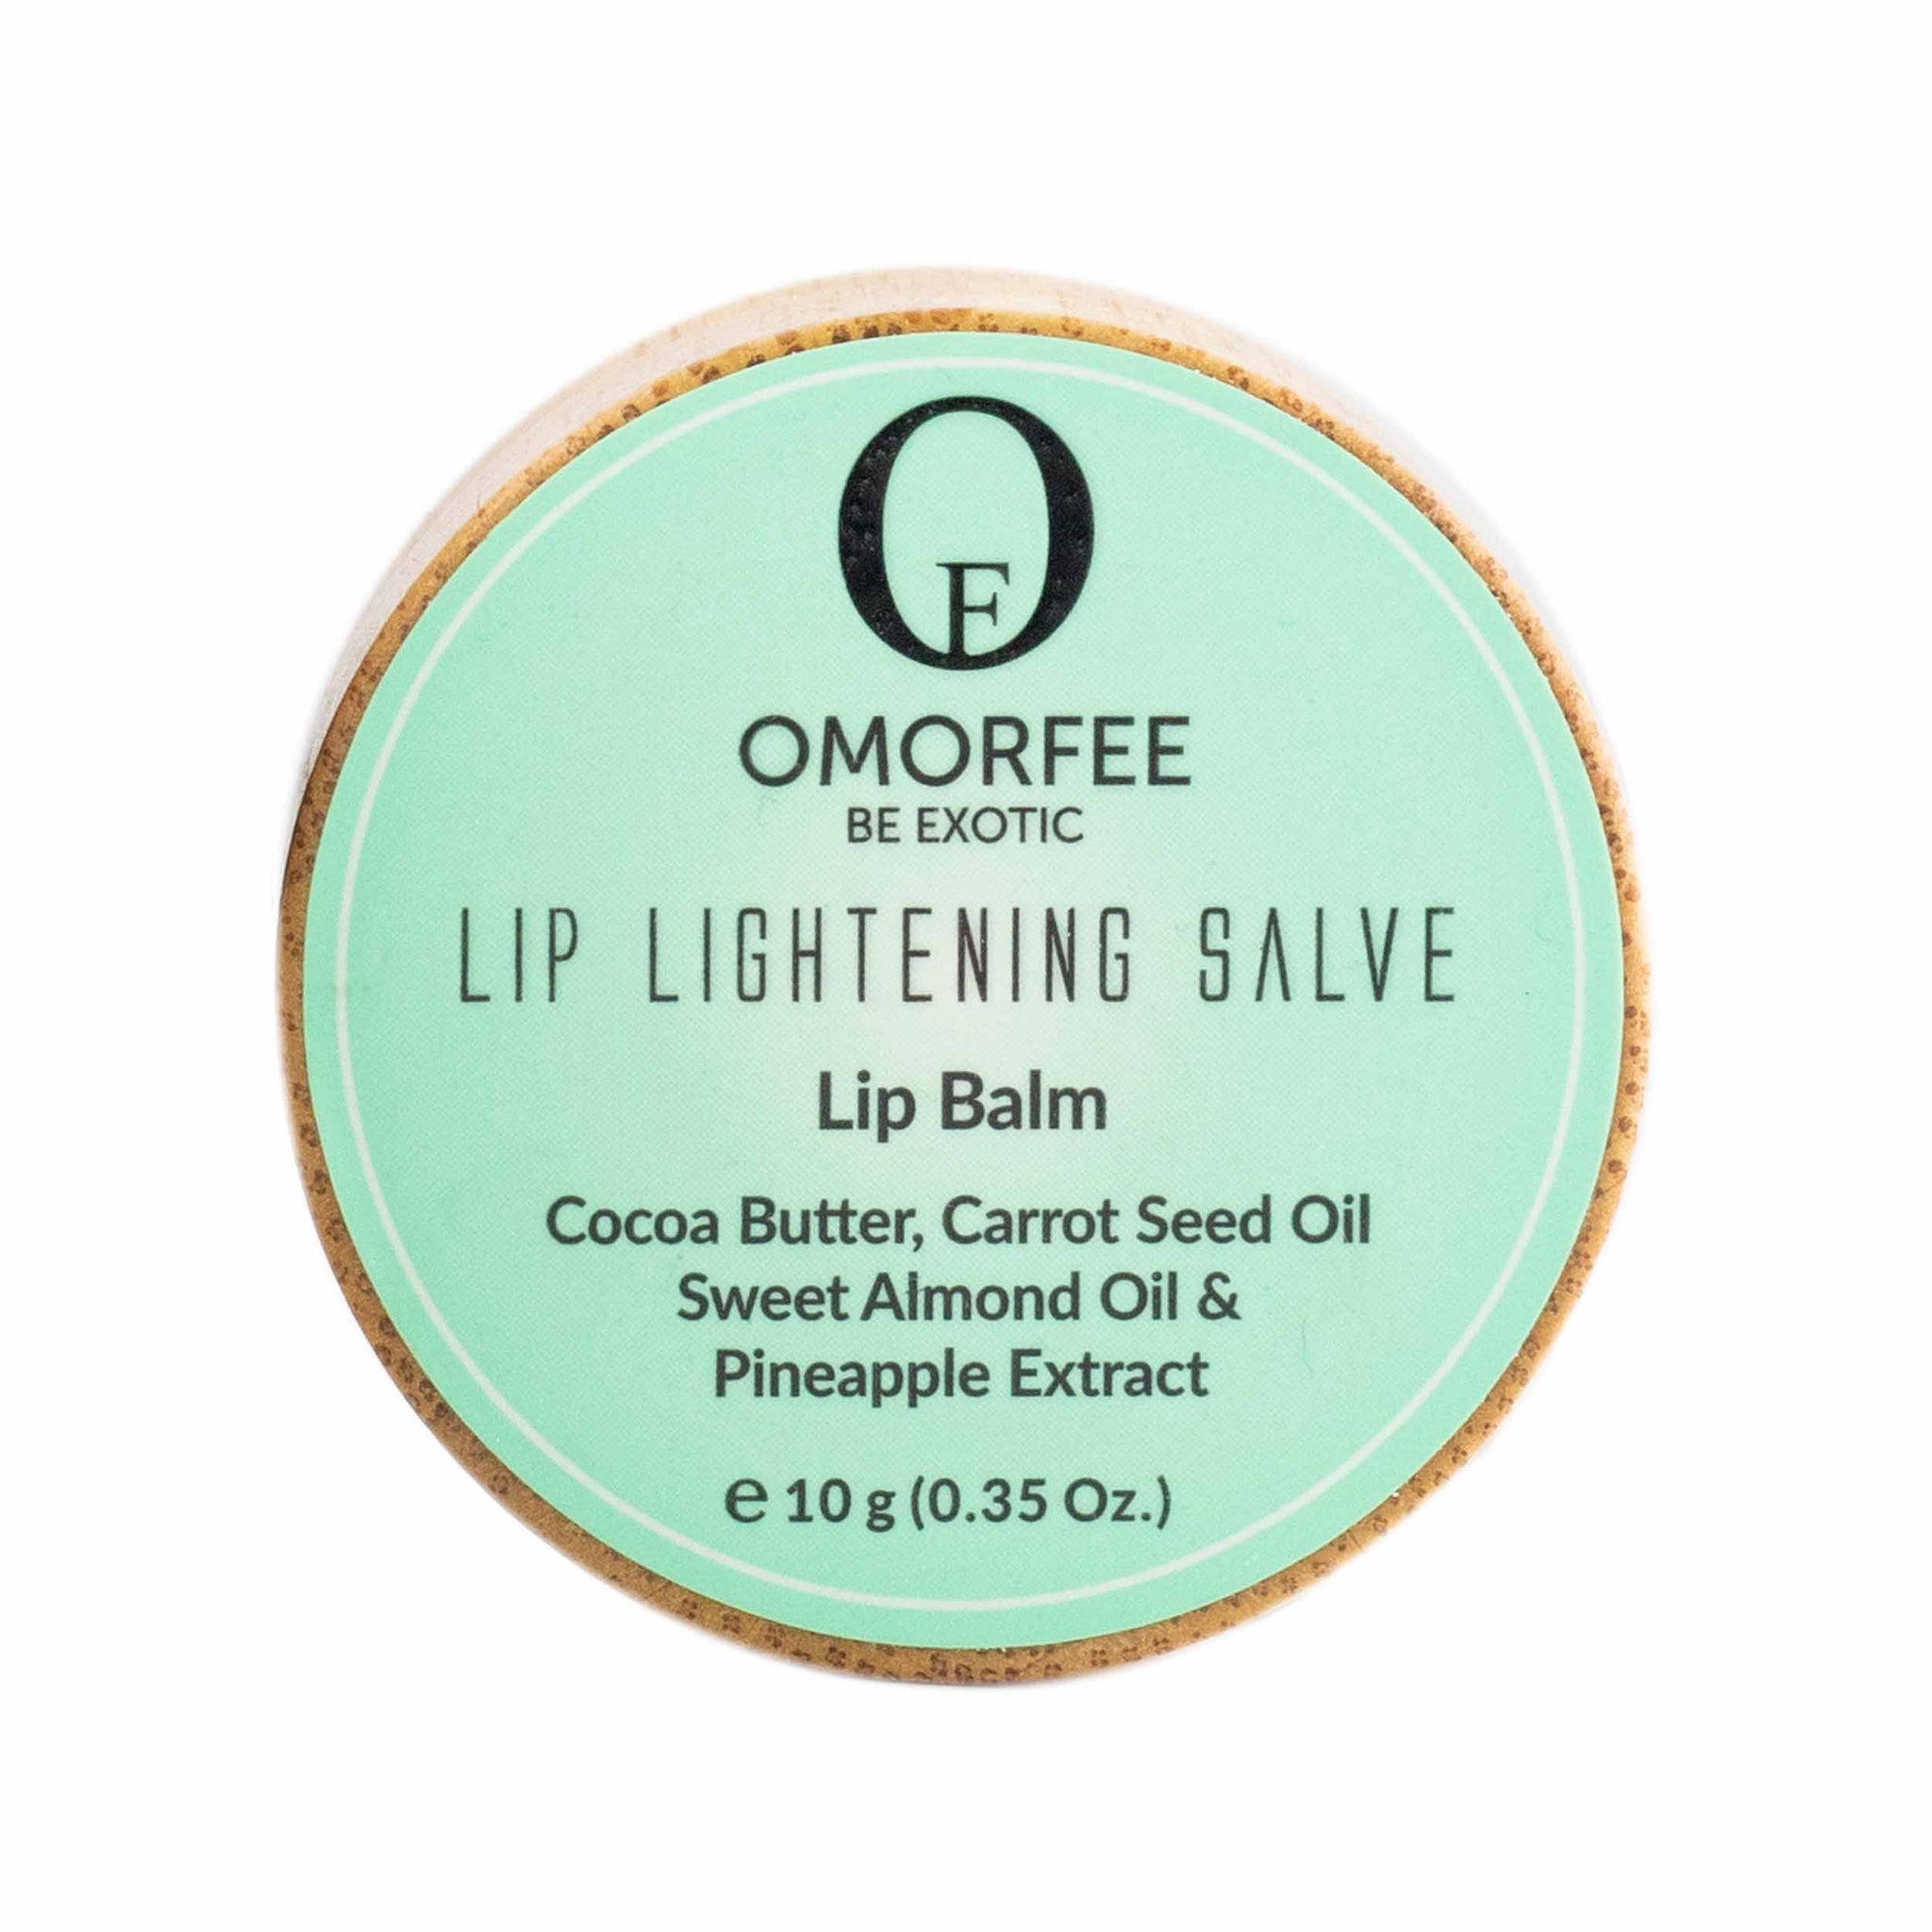 Omorfee Be Exotic Lip Lightening Balm